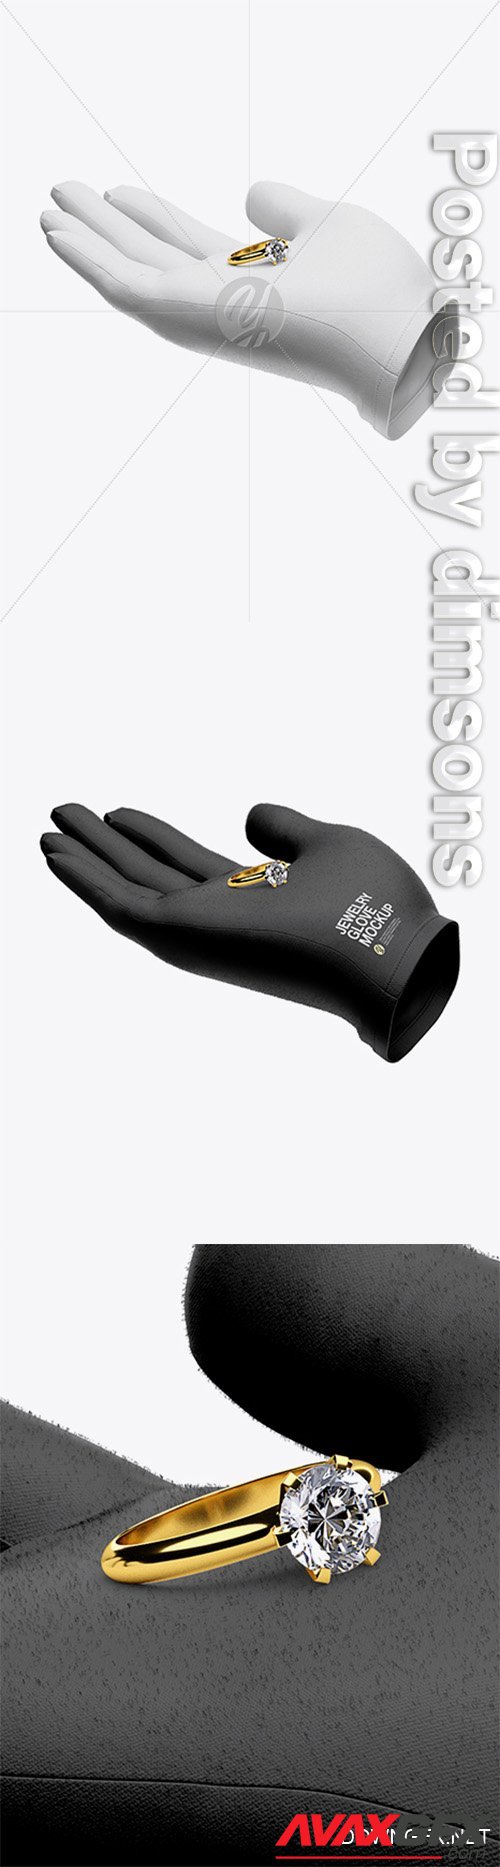 Jewelry Glove w/ Ring Mockup 35610 TIF